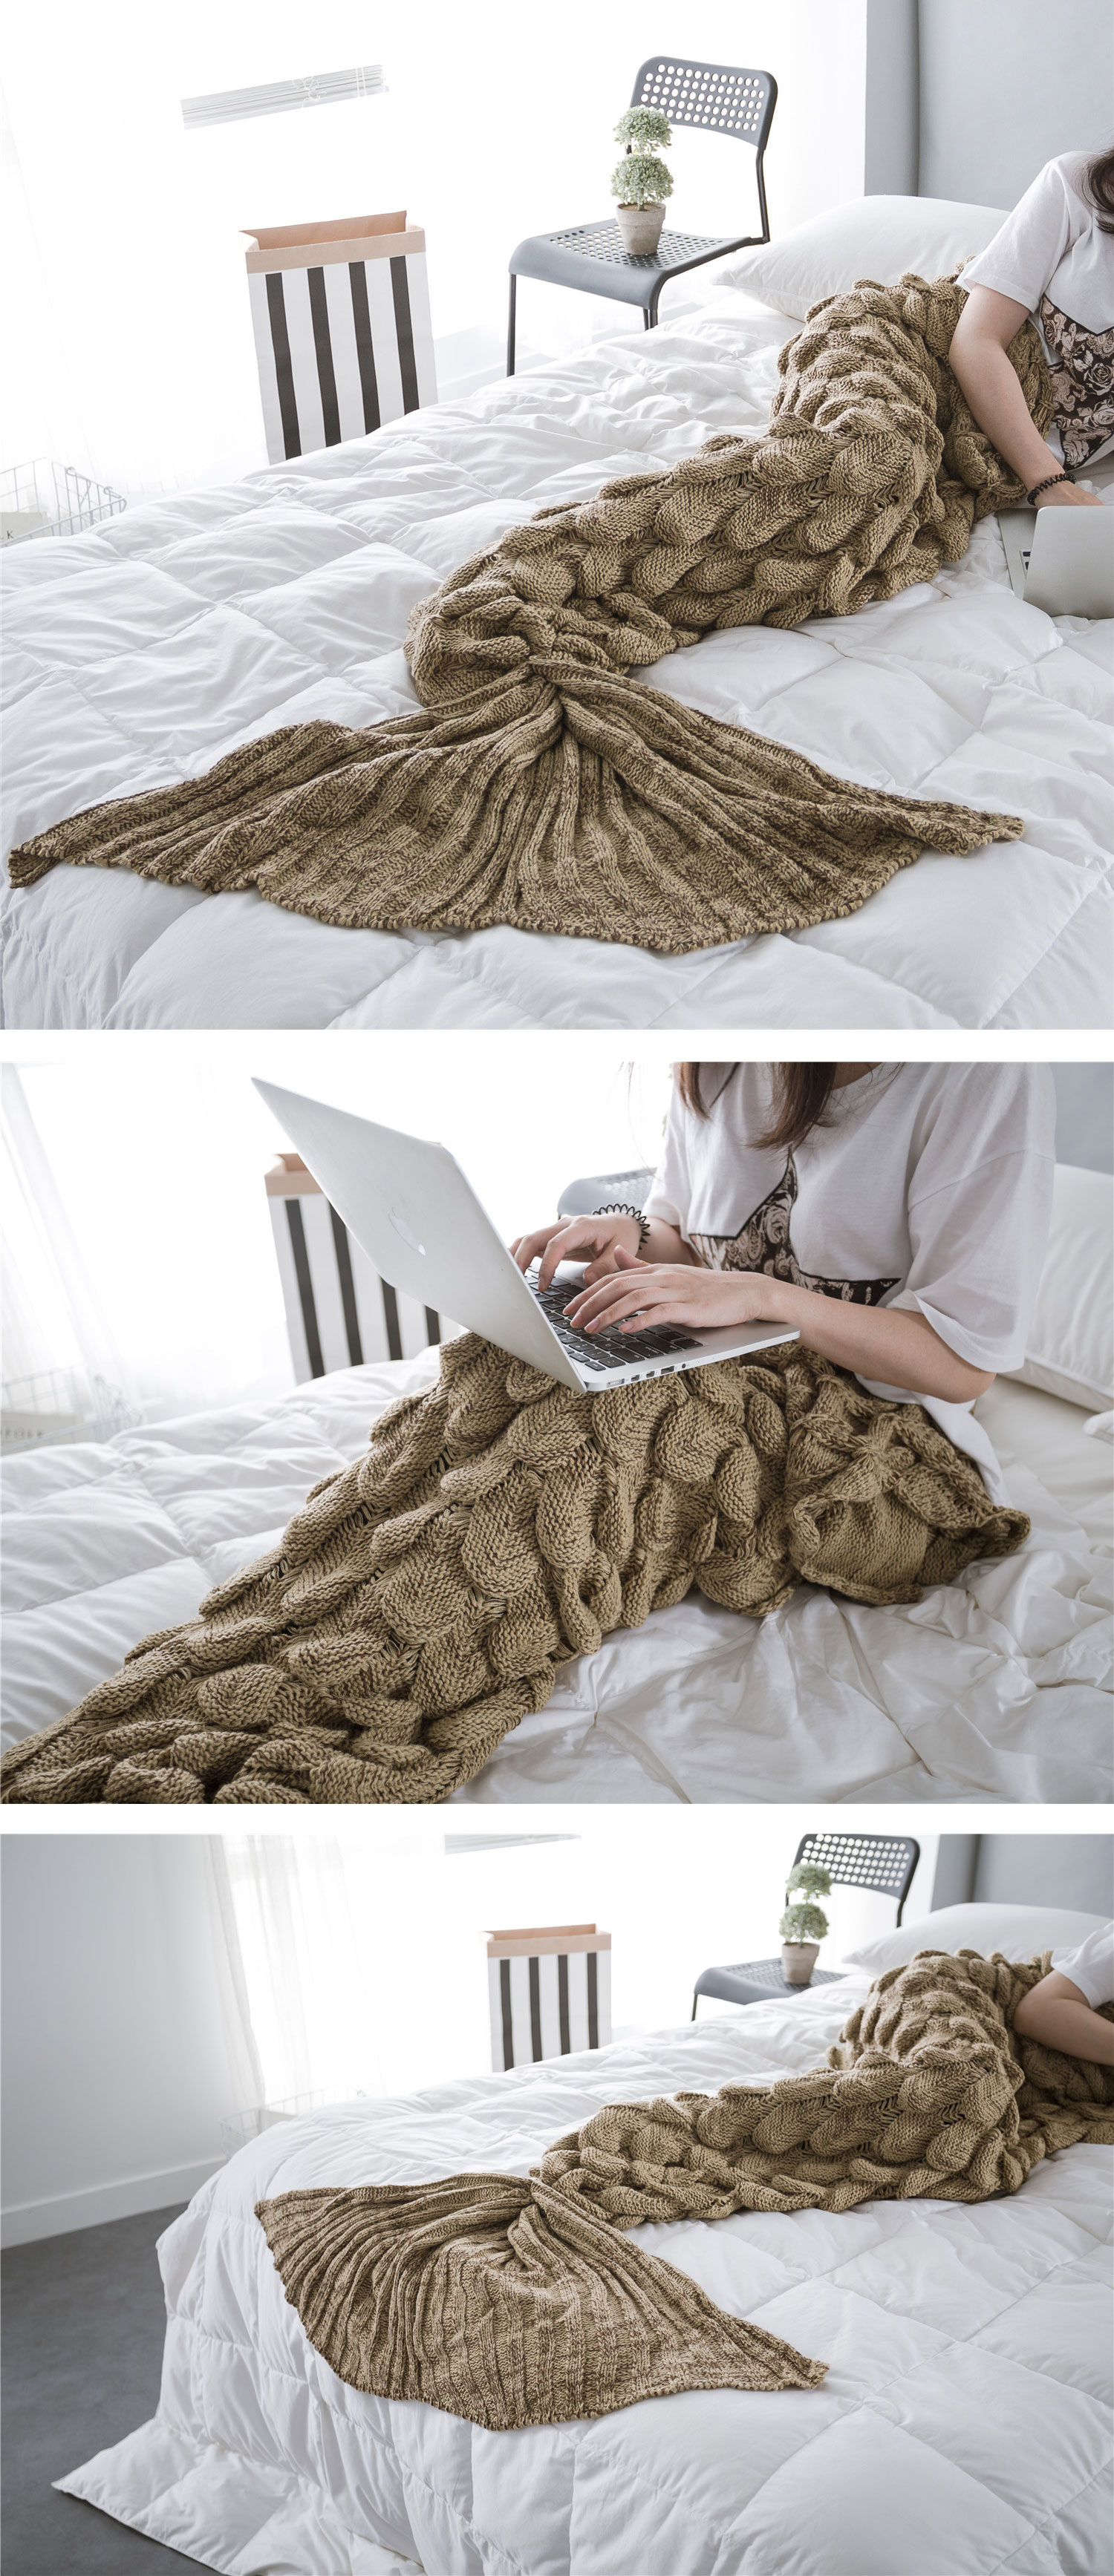 Honana-WX-39-90x190cm-Yarn-Knitting-Mermaid-Tail-Blanket-Fish-Scales-Style-Super-Soft-Sleep-Bag-Bed--1093601-6